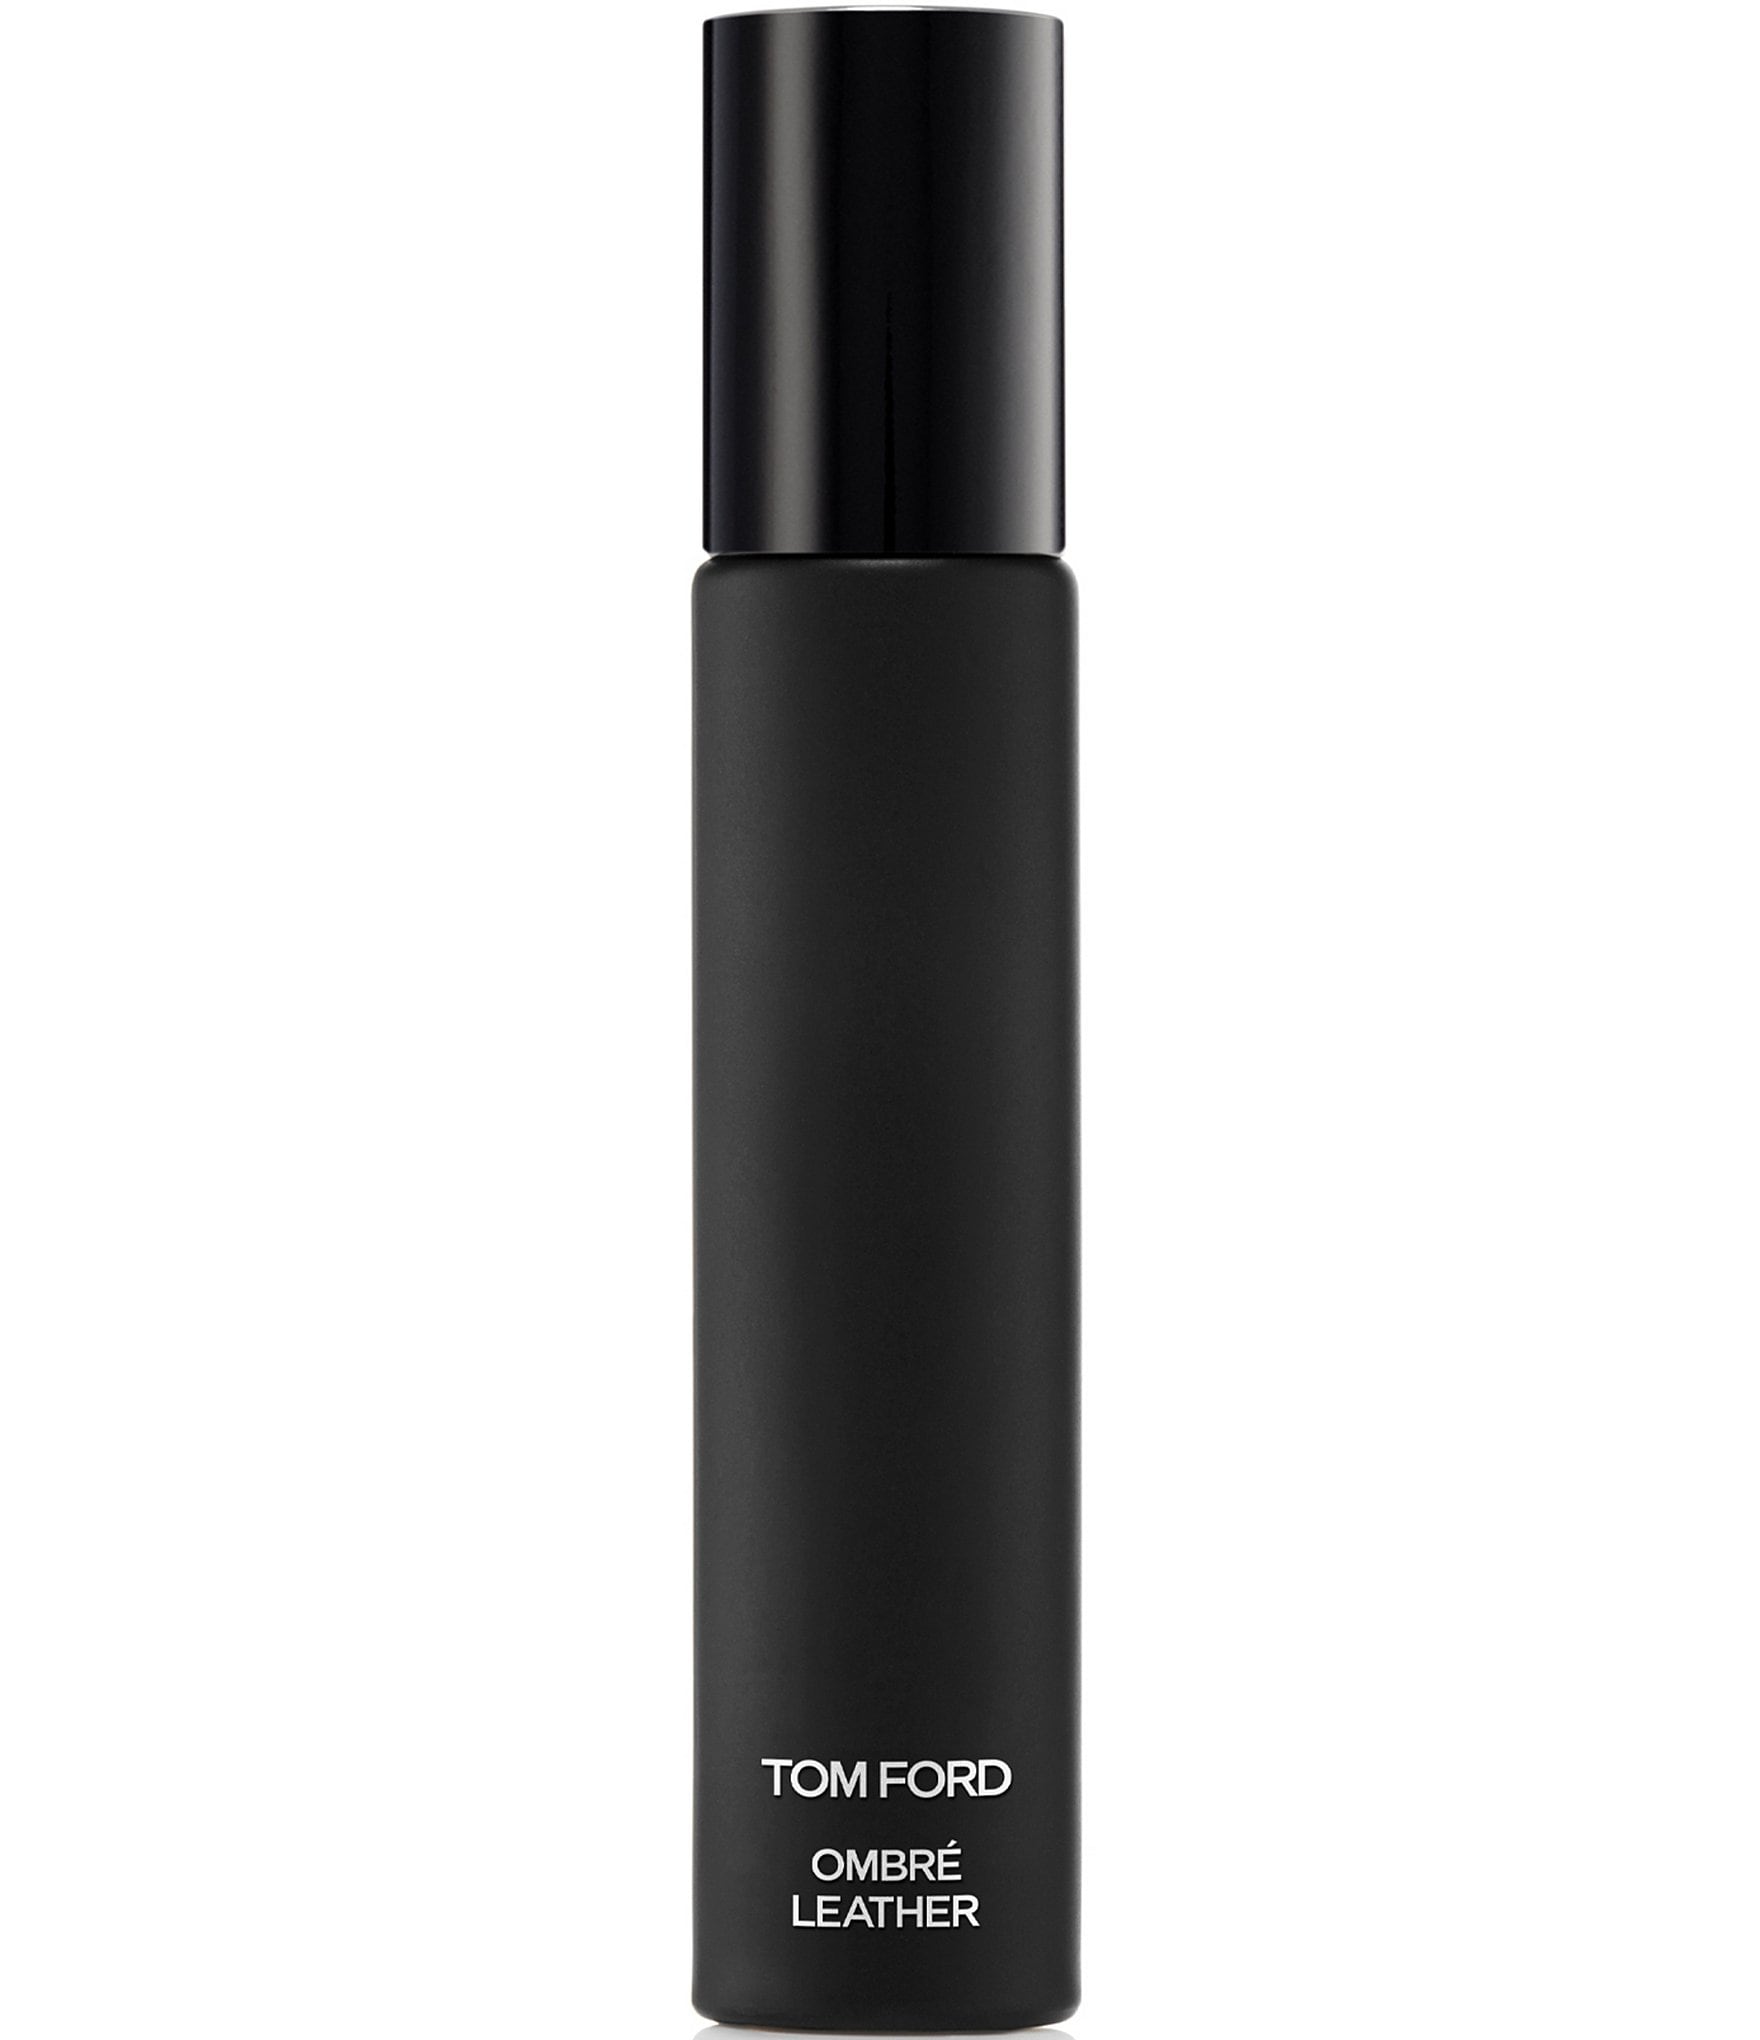 TOM FORD Ombre Leather Eau de Parfum Travel Spray | Dillard's